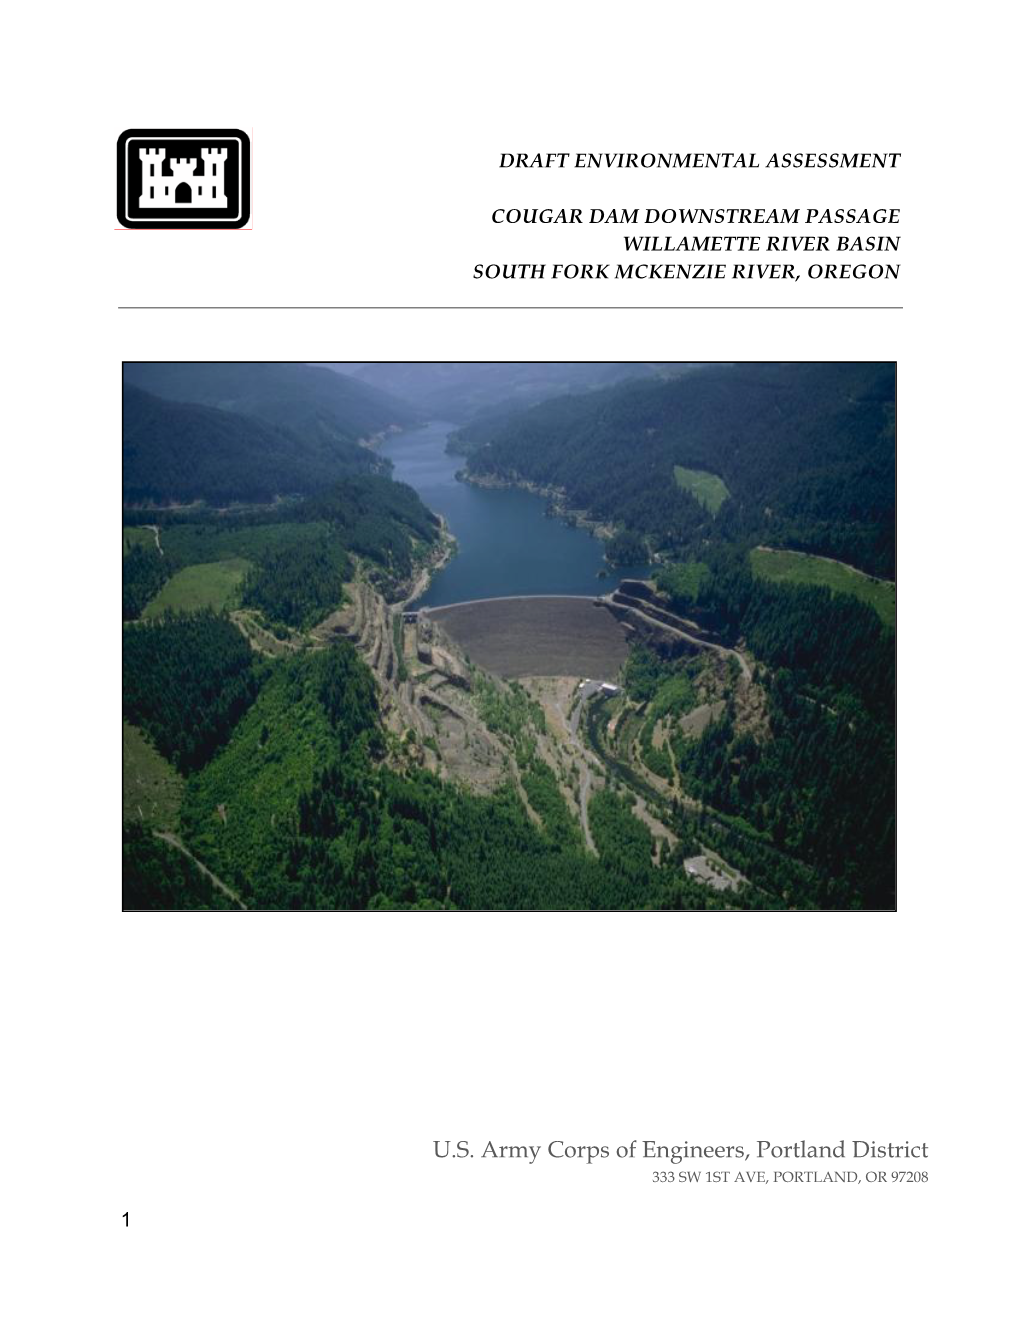 Cougar Downstream Passage Project DRAFT Environmental Assessment